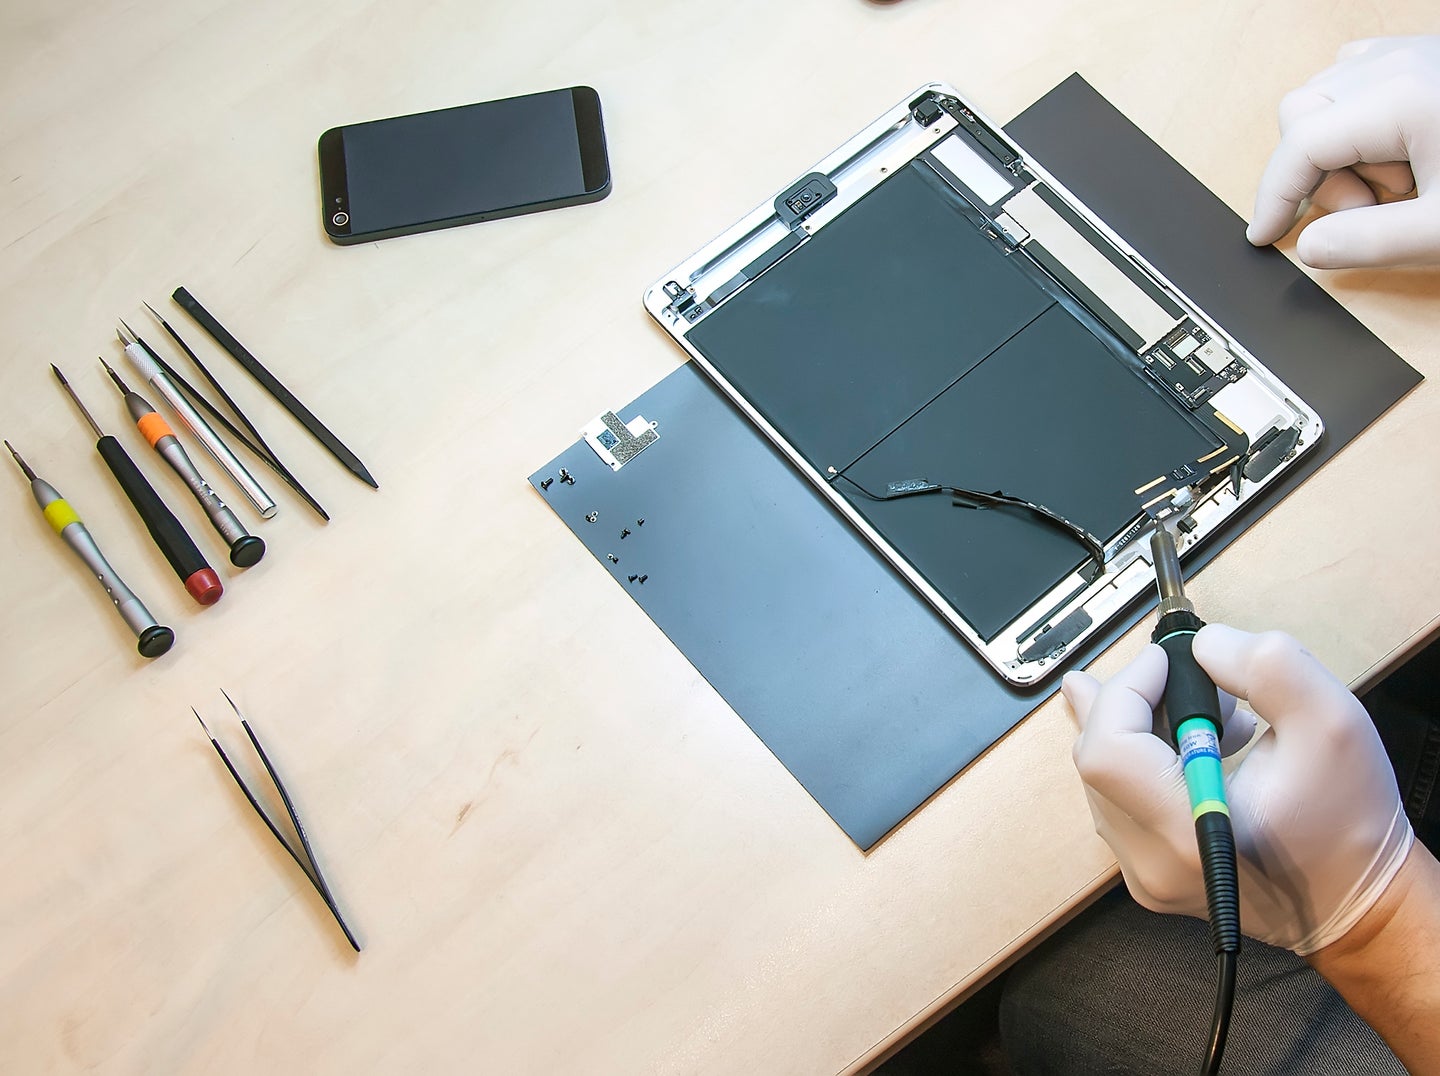 Overhead shot of person repairing iPad on desk